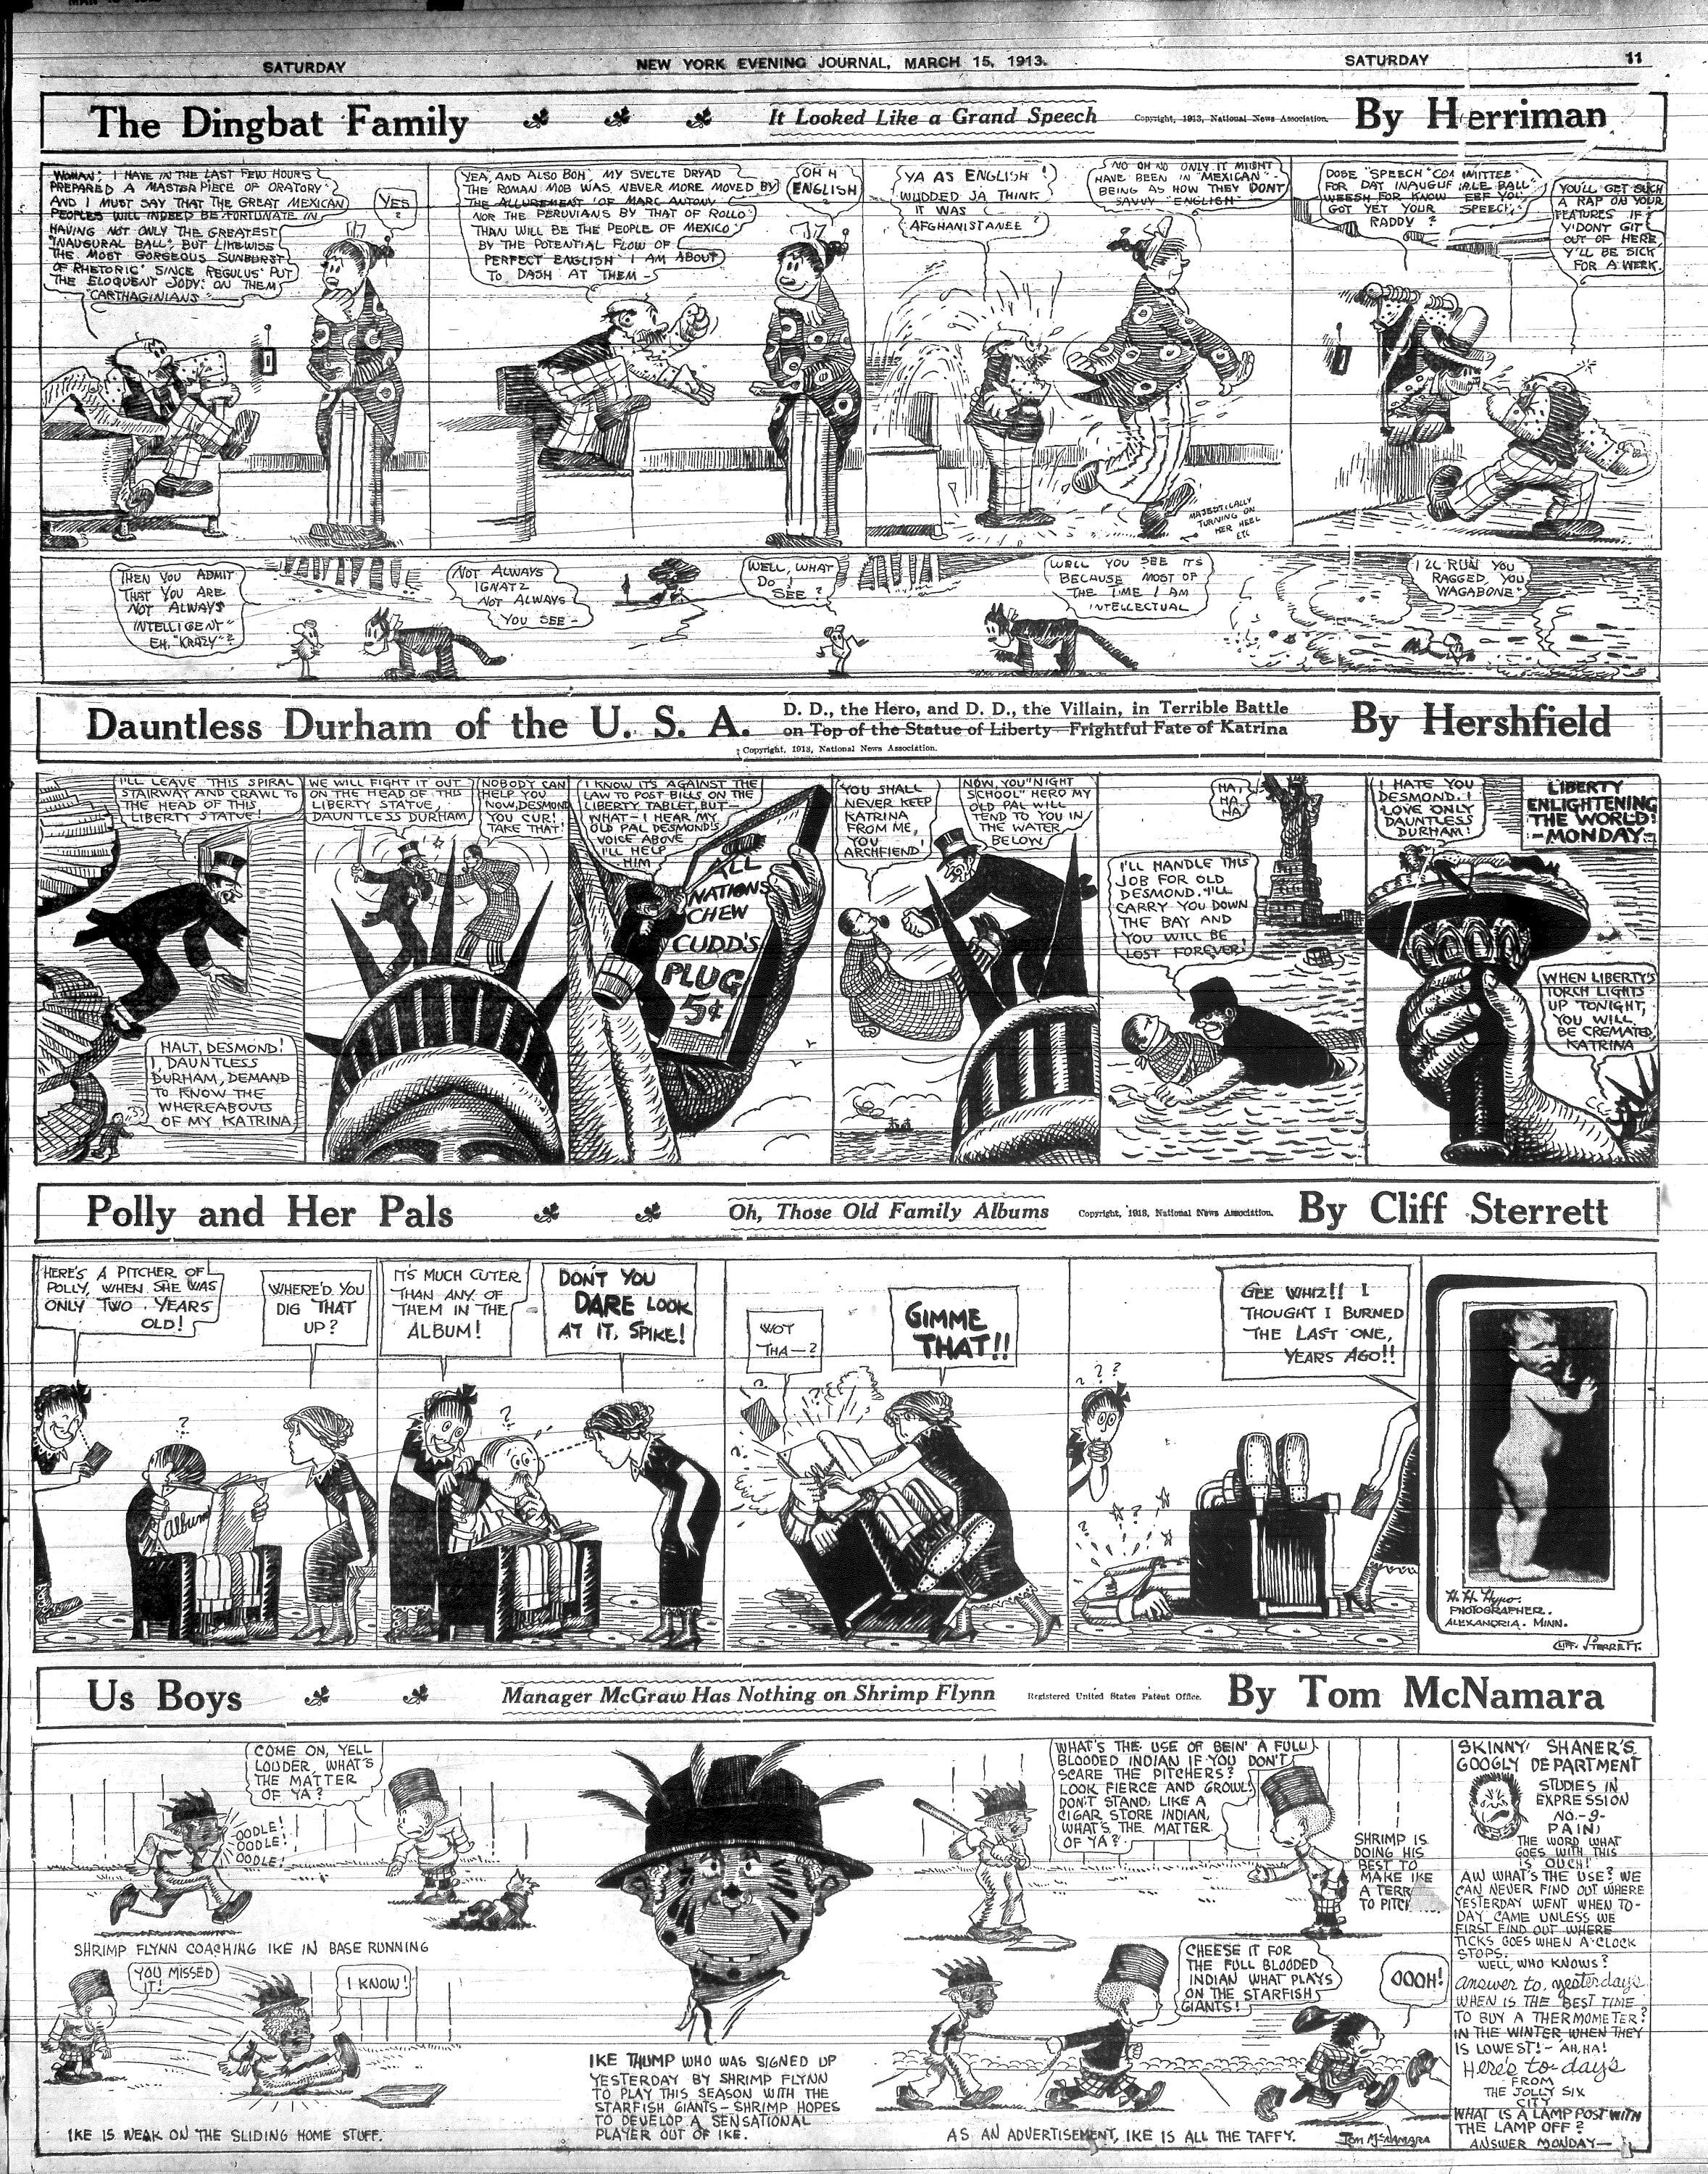 13-nyej-03-15-1913-comics-page.jpg